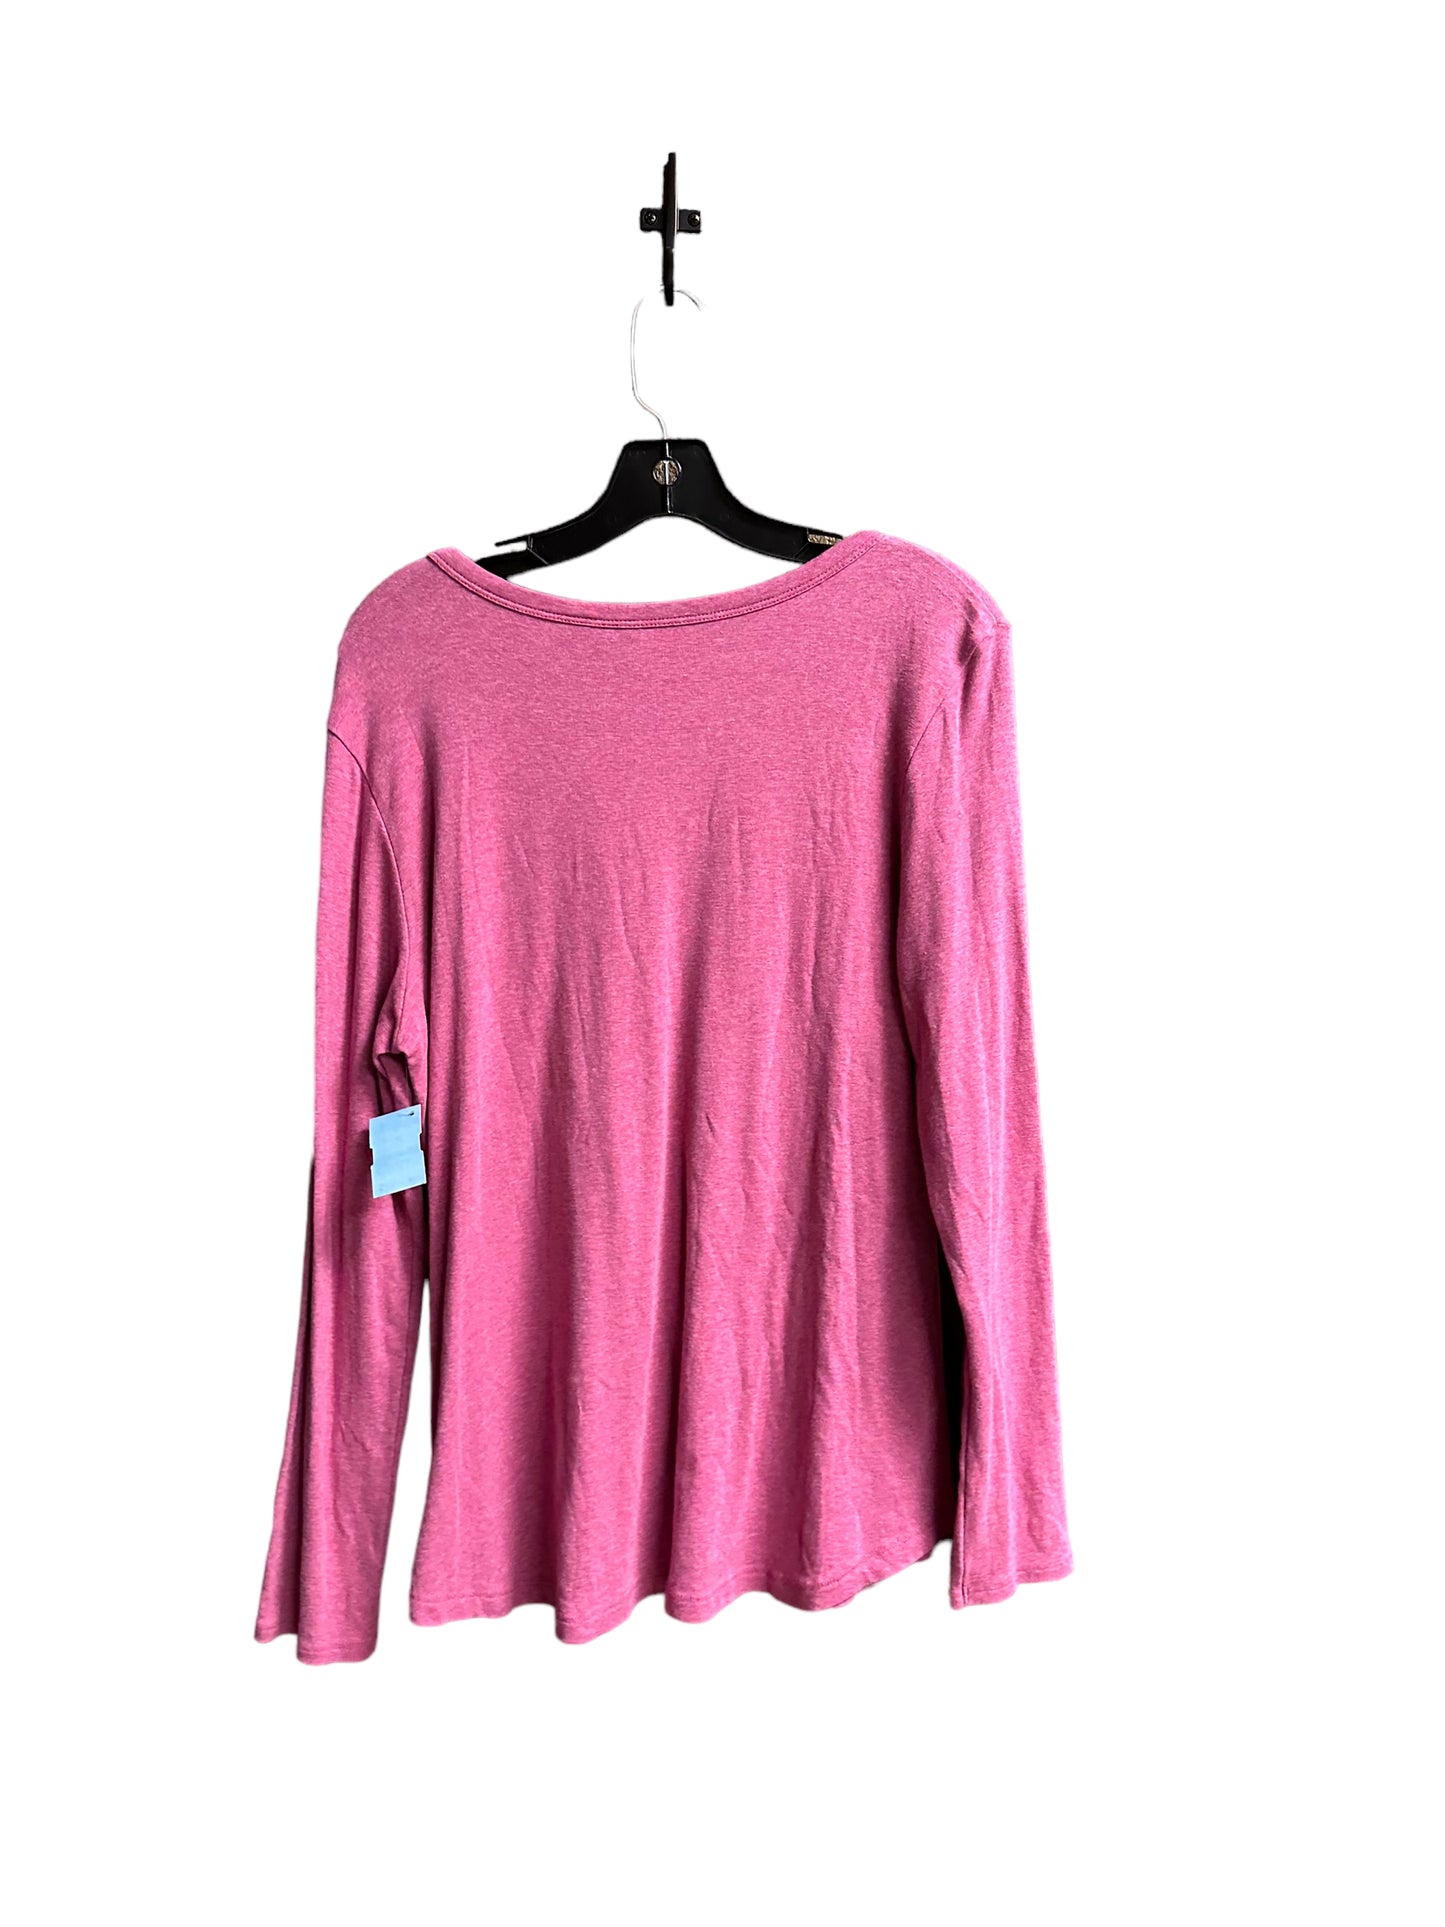 Top Long Sleeve Basic By Cynthia Rowley  Size: Xl